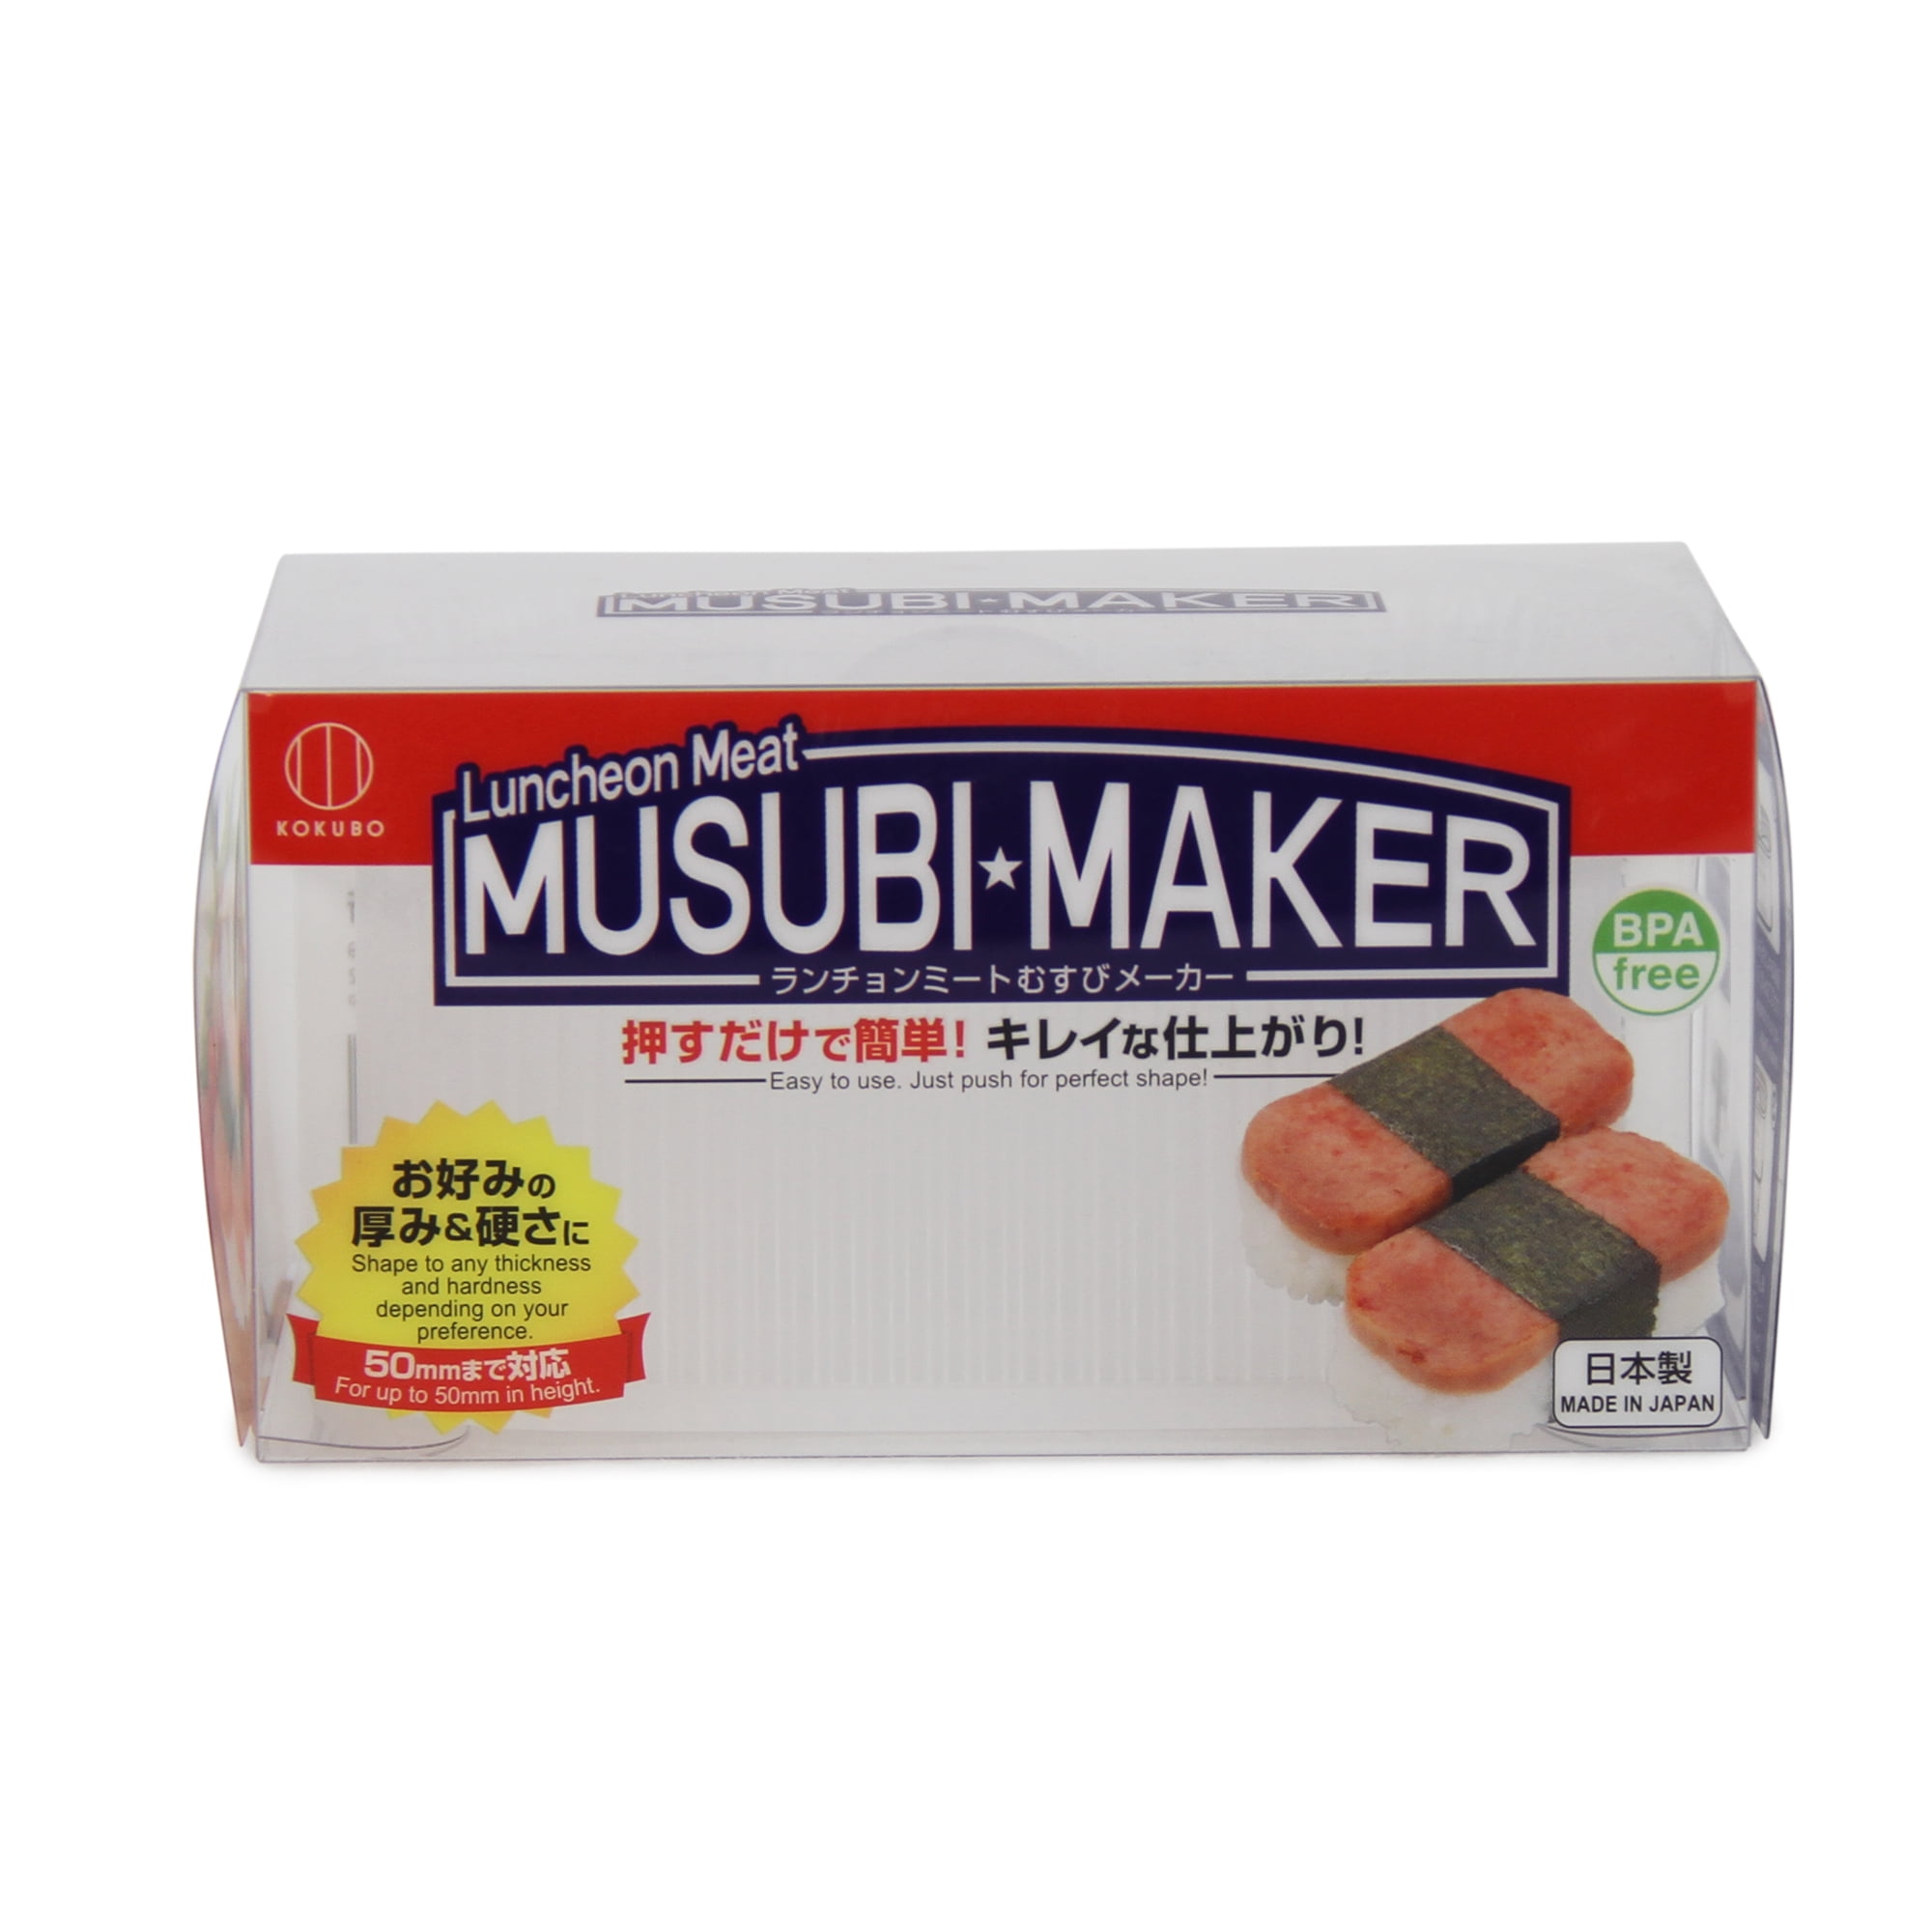 Musubi Maker Press Non Stick Bpa Free Luncheon Meat Press Musubi